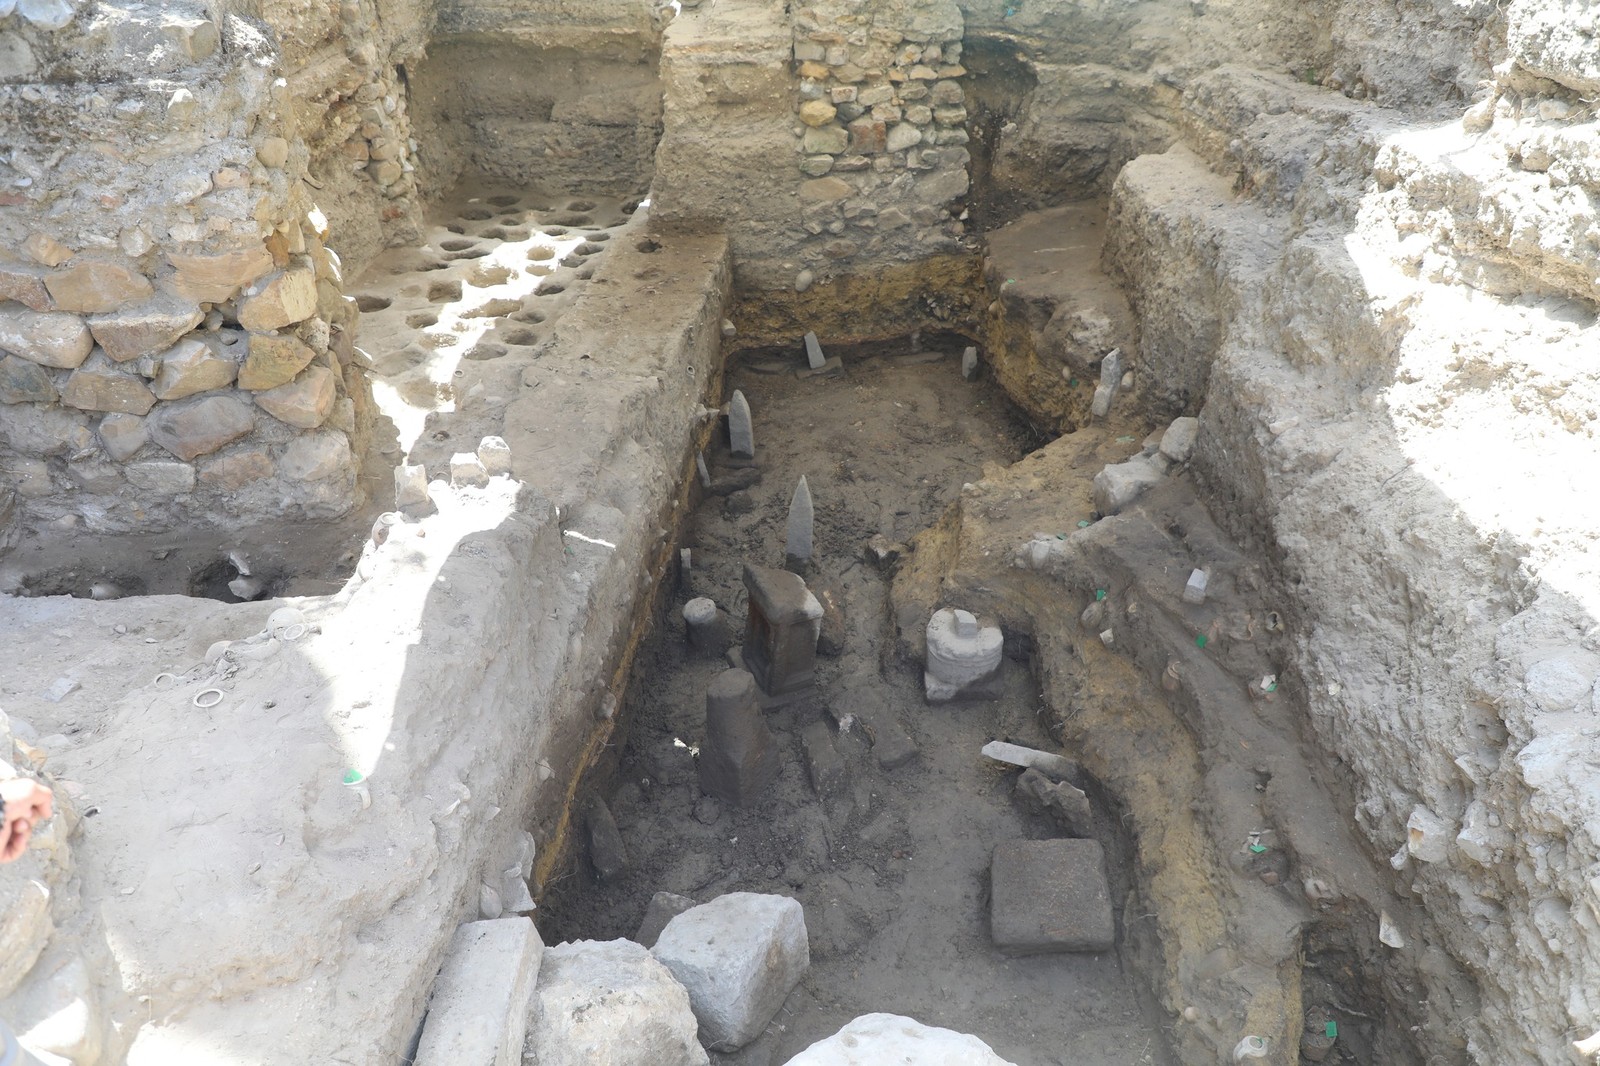 Escavações na Tunísia na antiga cidade de Cartago — Foto: Ministério de Assuntos Culturais da Tunísia/Facebook